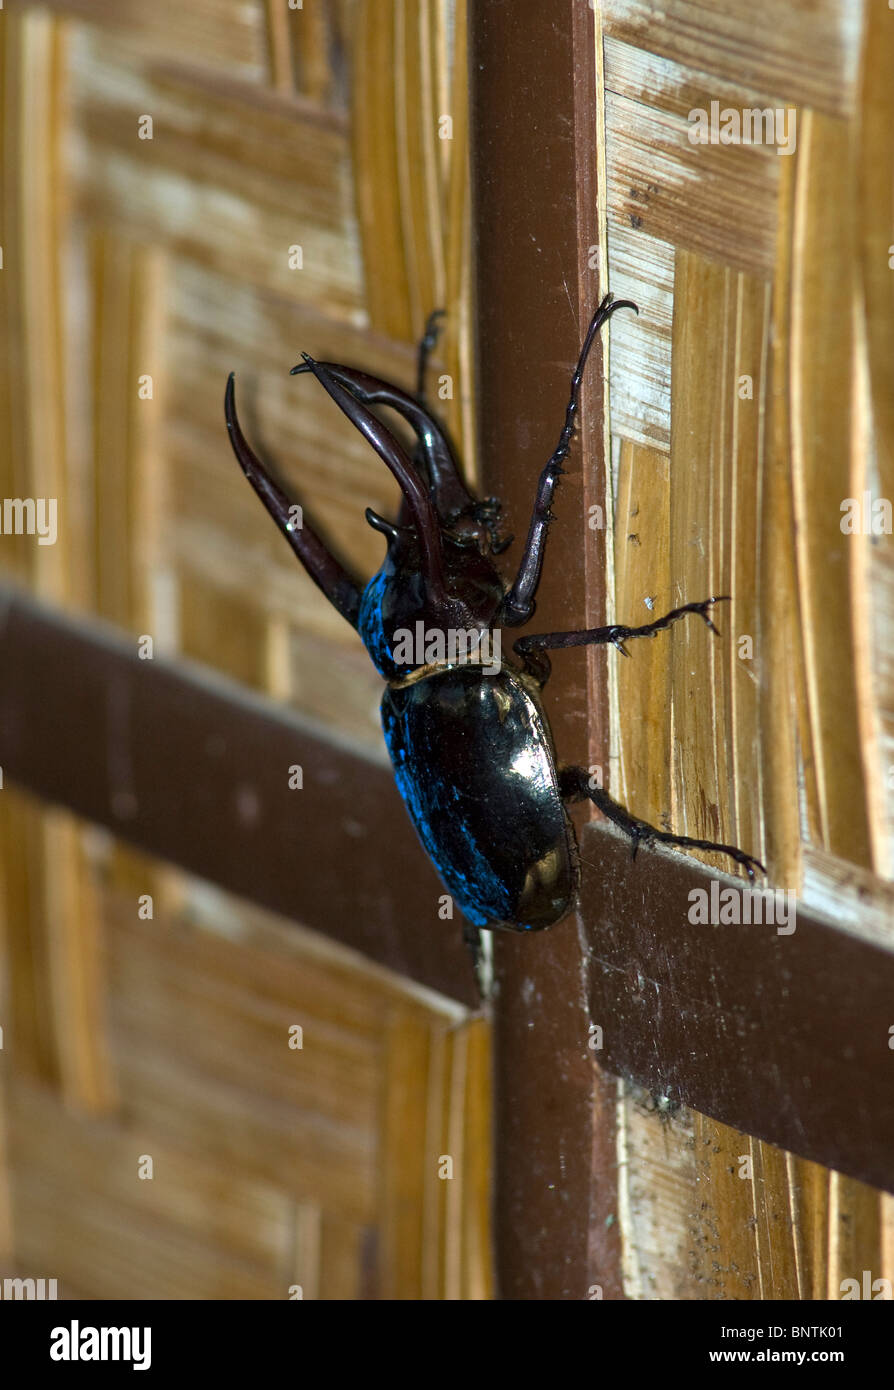 Giant Blue Stag Beetle, Mindanao, Philippines. Stock Photo